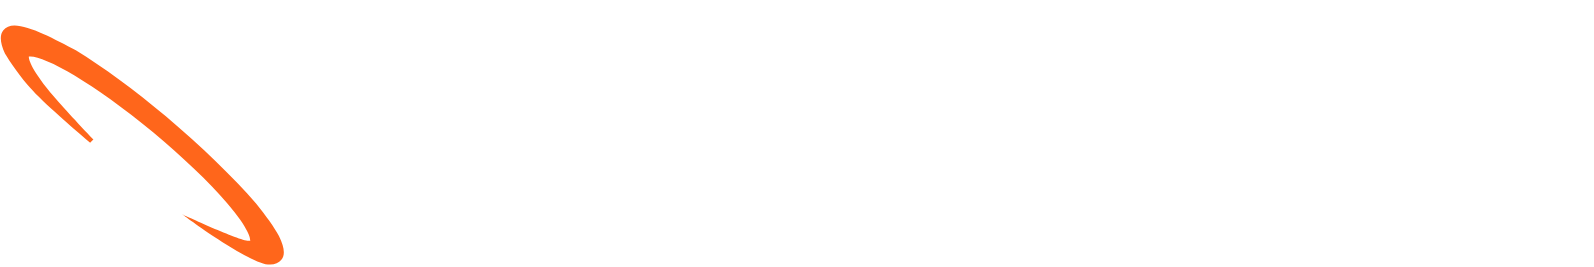 908 Devices logo large for dark backgrounds (transparent PNG)